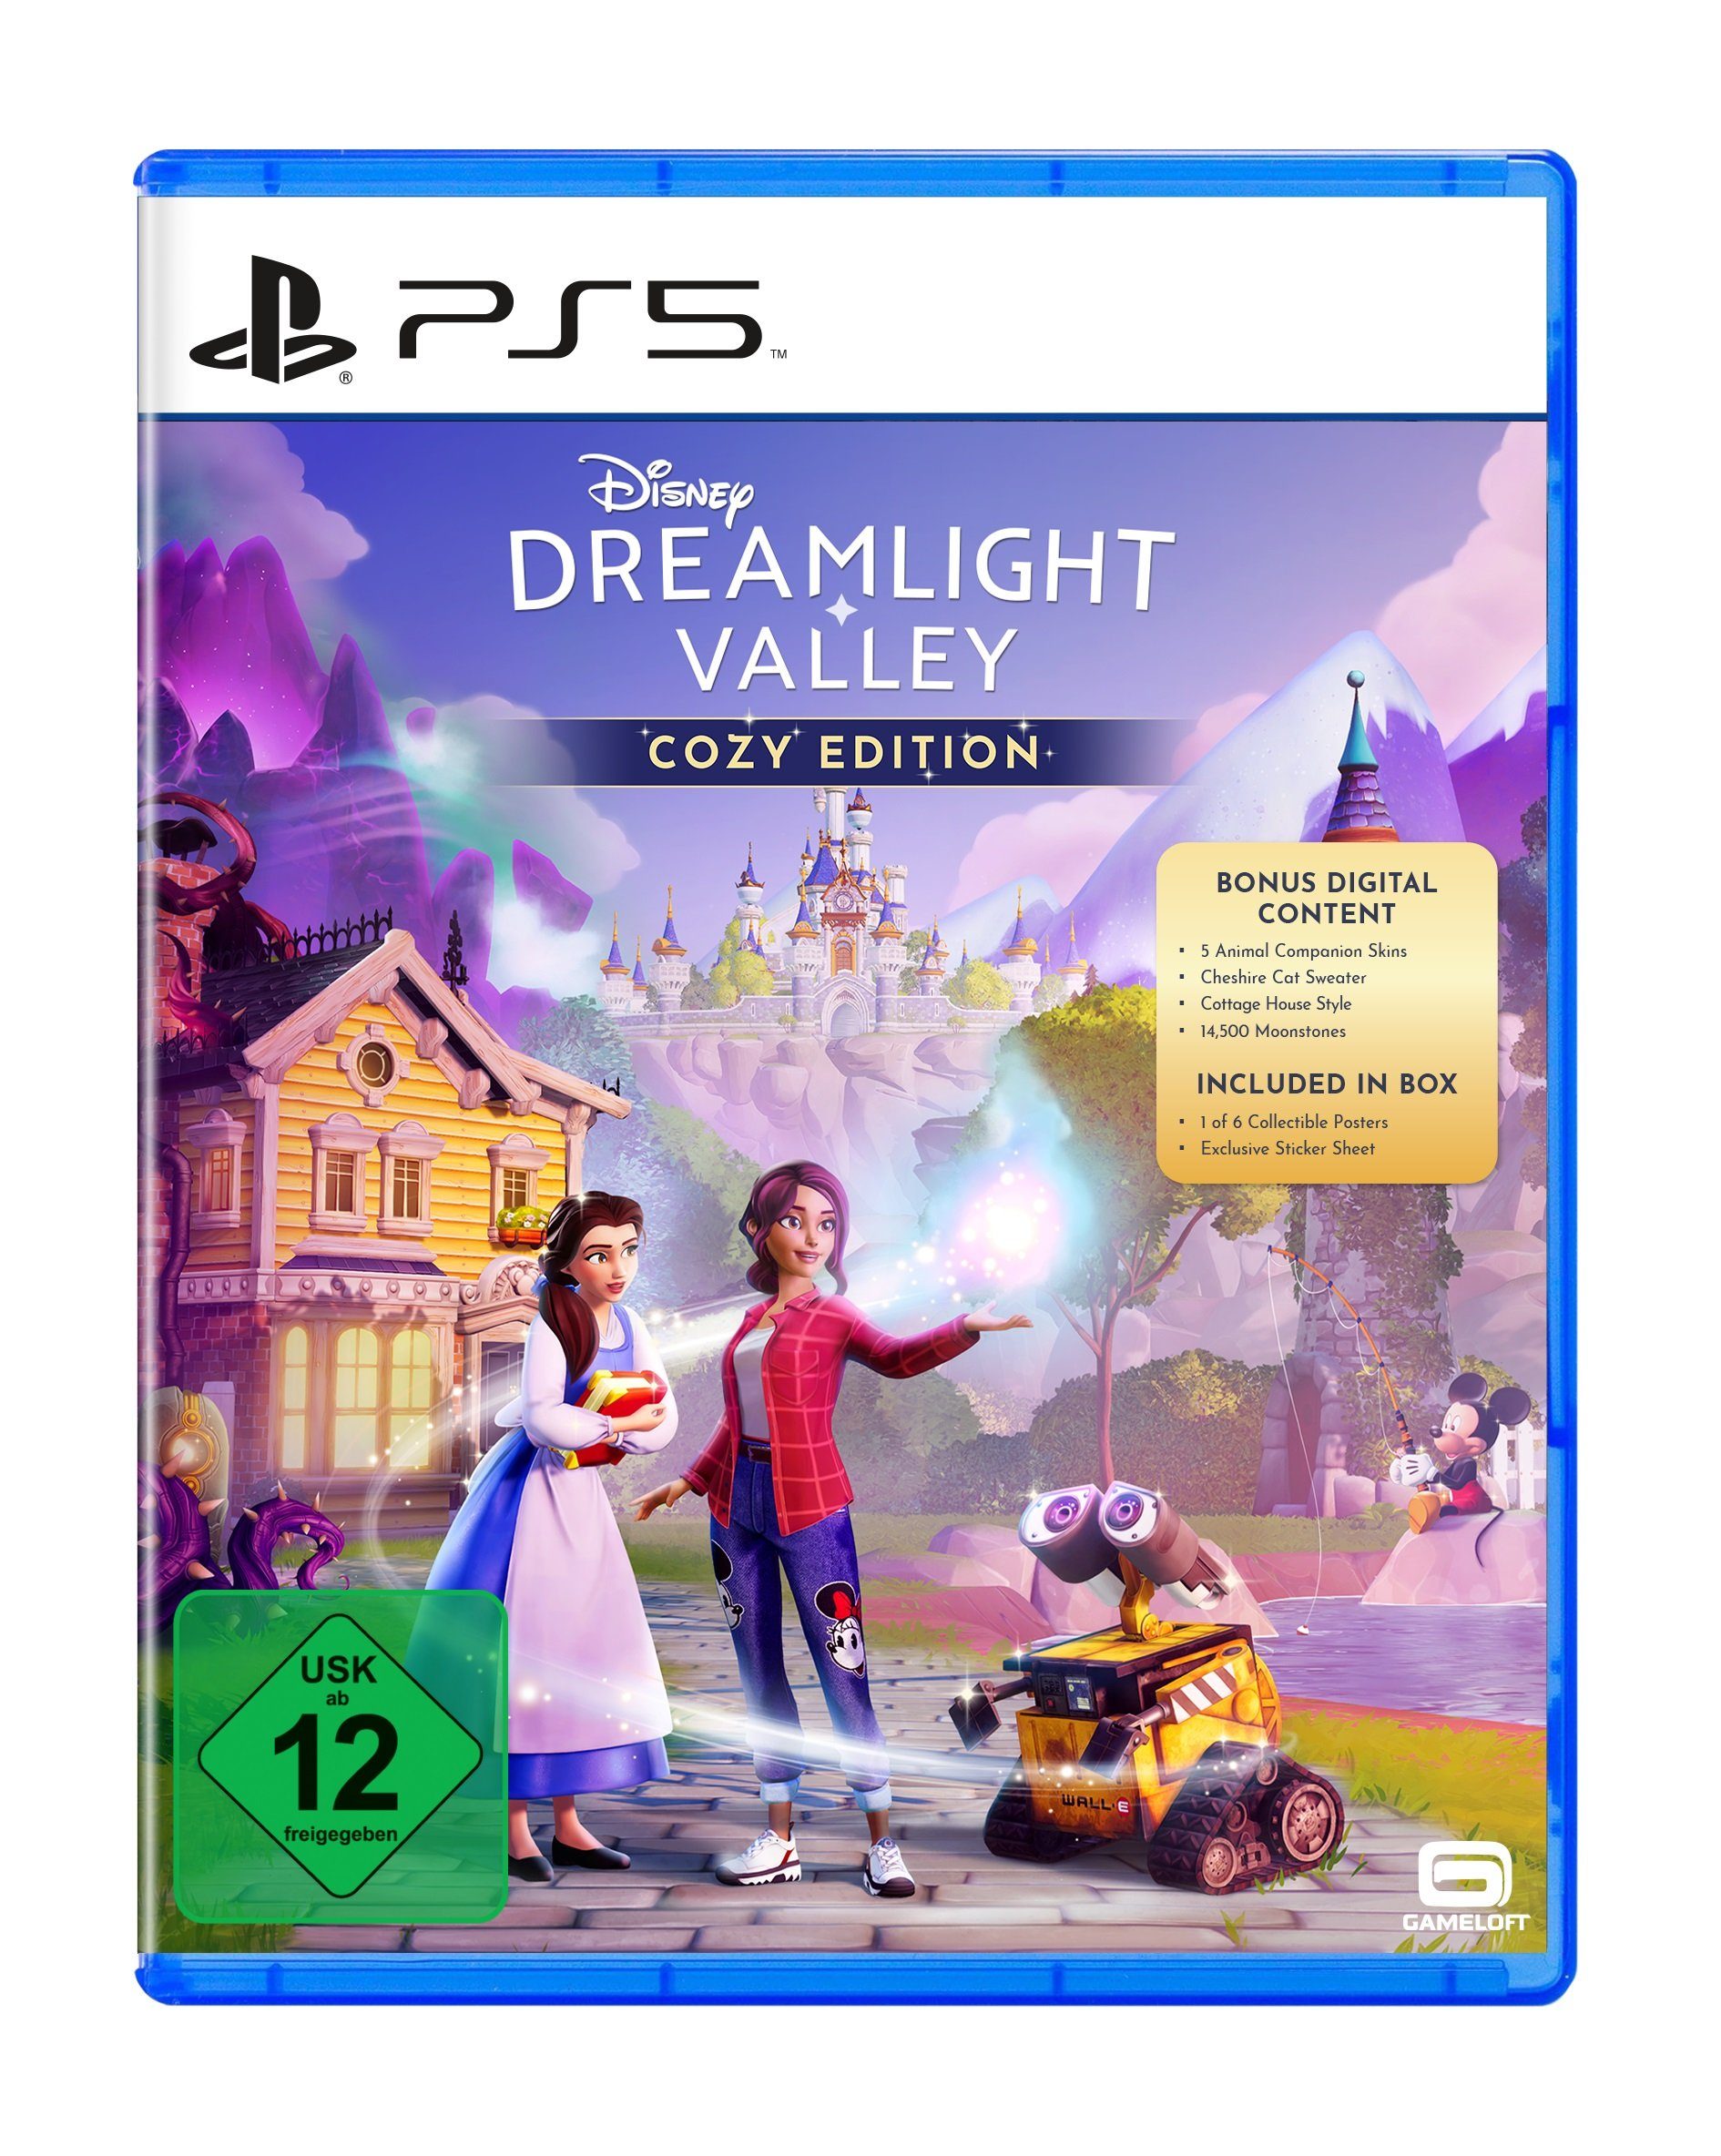 PlayStation Cozy Dreamlight 5 Disney Nighthawk Edition Valley: